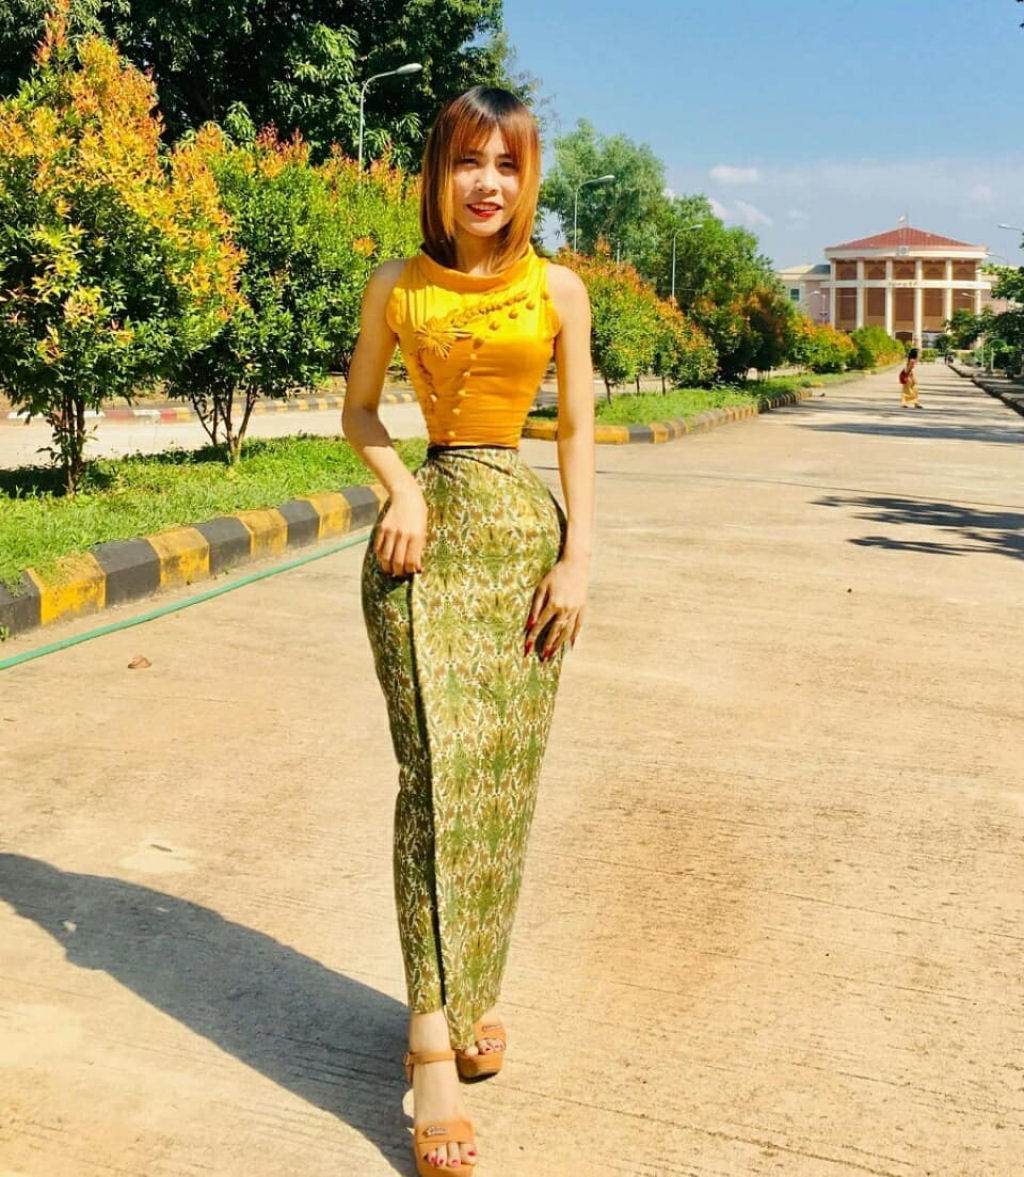 É difícil acreditar que minúscula cintura desta birmanesa seja natural